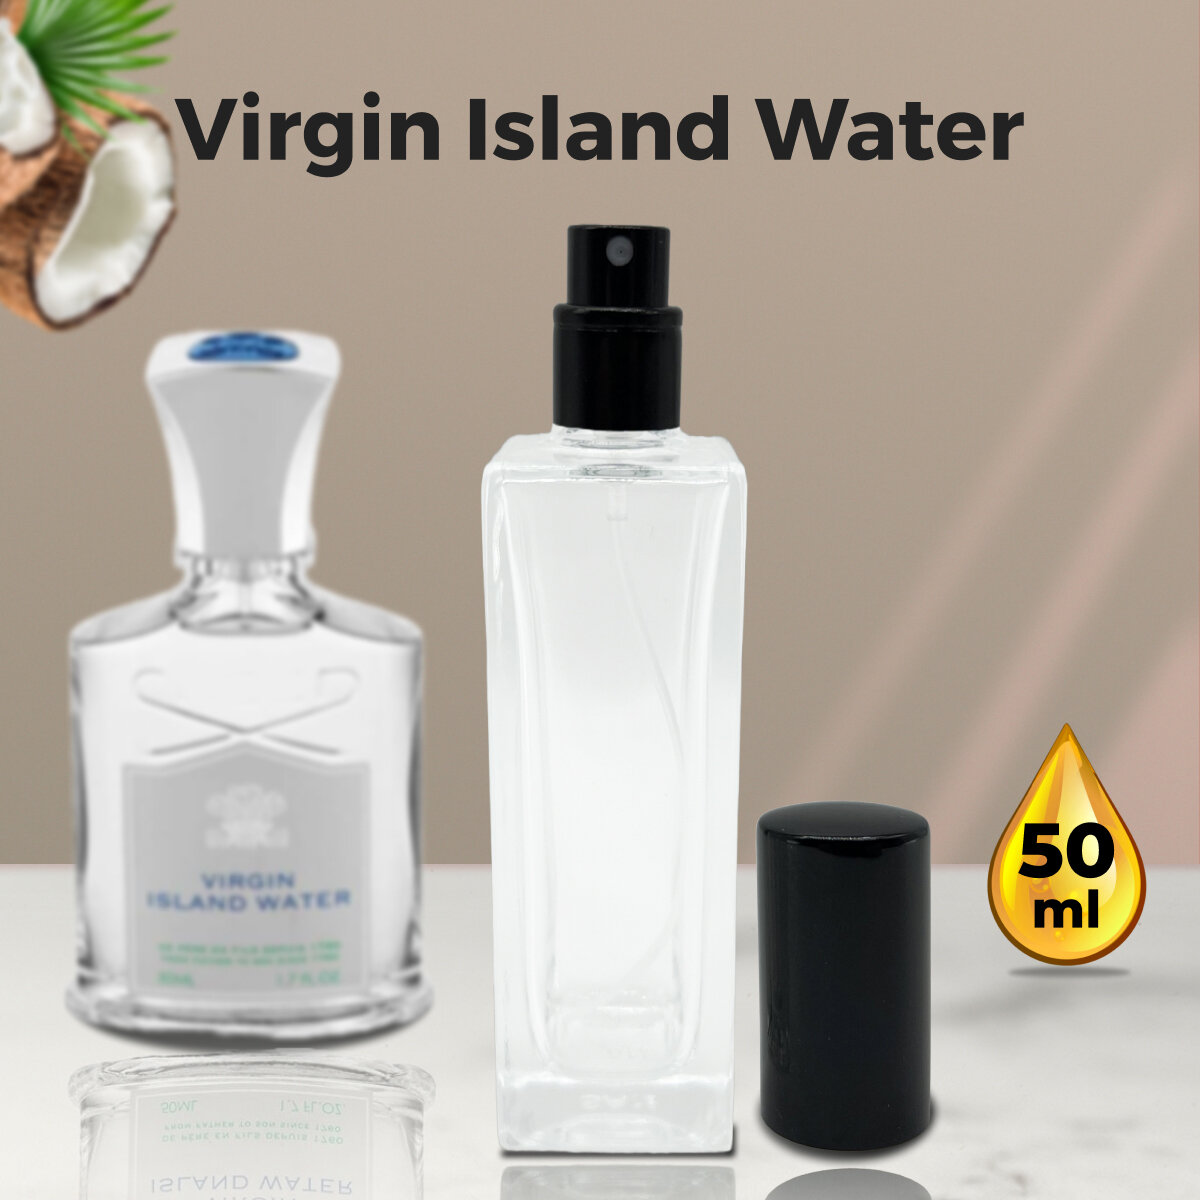 "Virgin Island Water" - Духи унисекс 50 мл + подарок 1 мл другого аромата